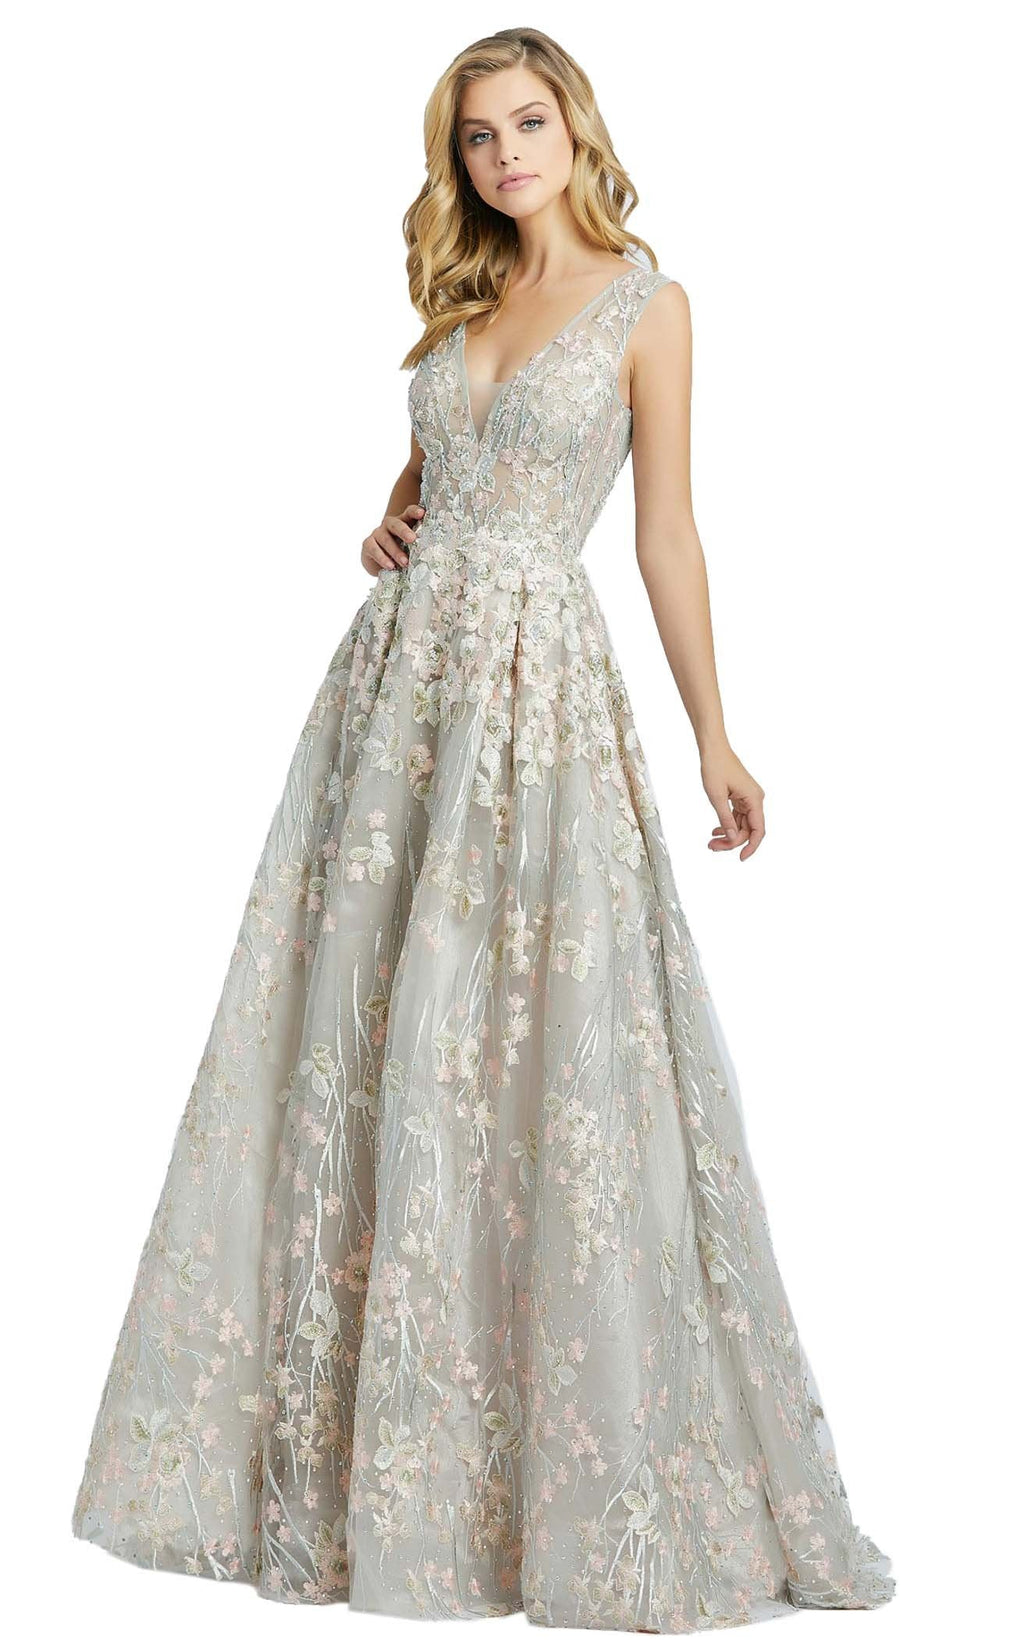 buy mac duggal dresses online